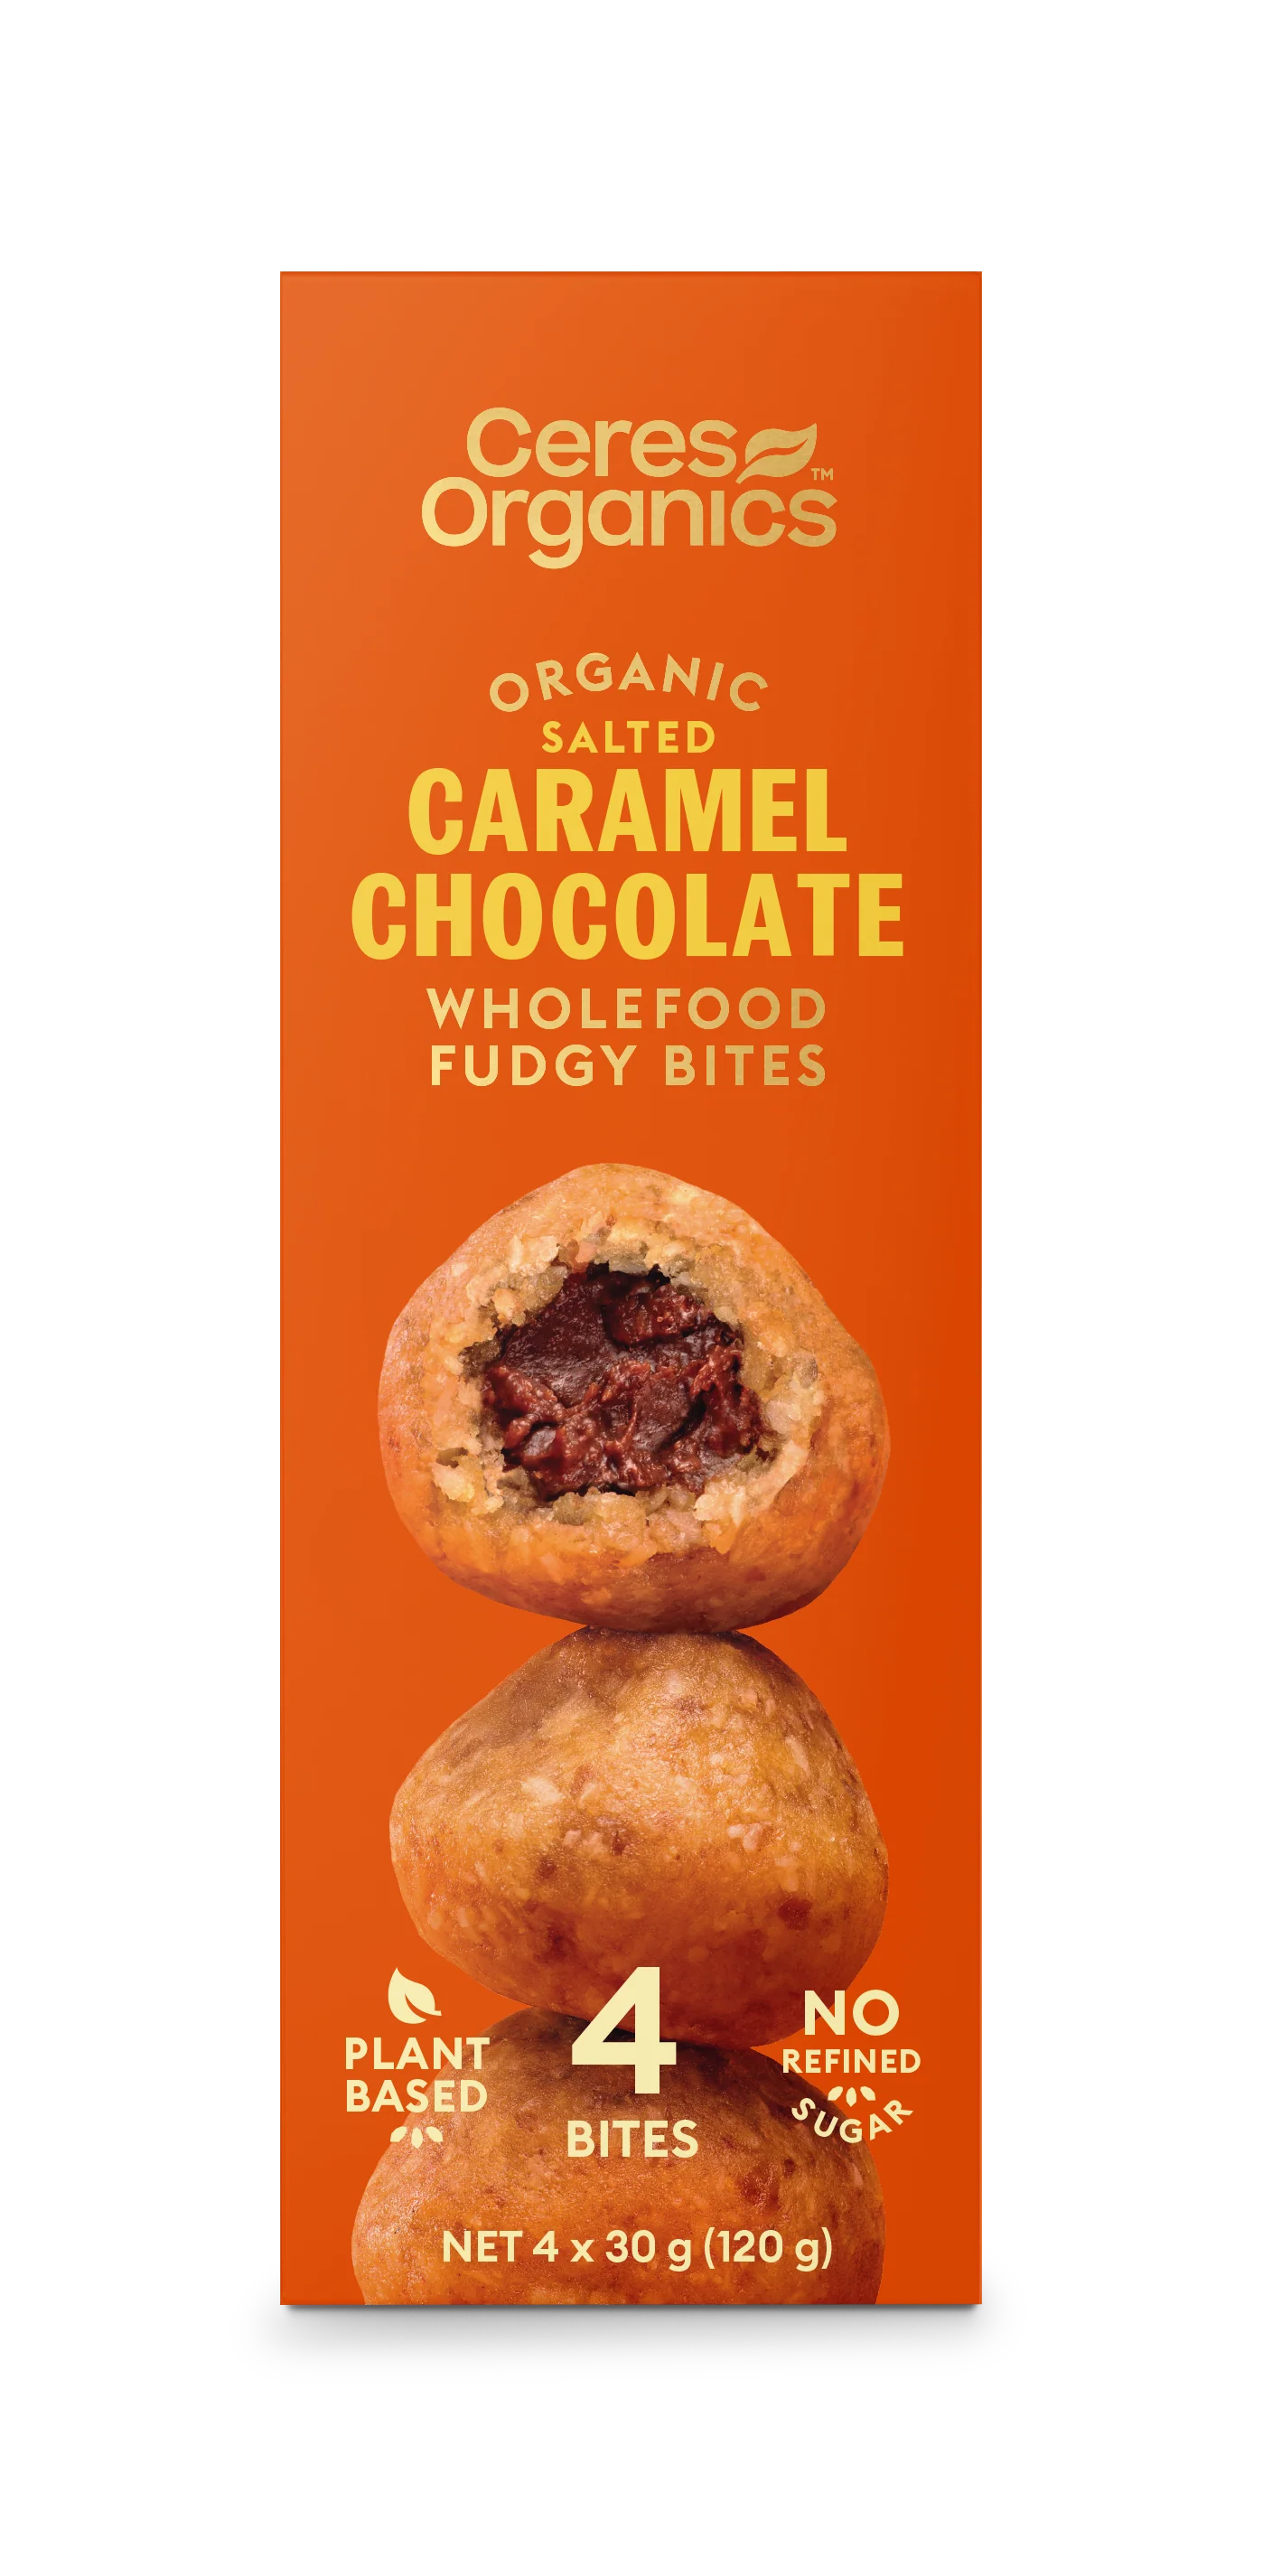 Caramel Chocolate Fudgy Bites